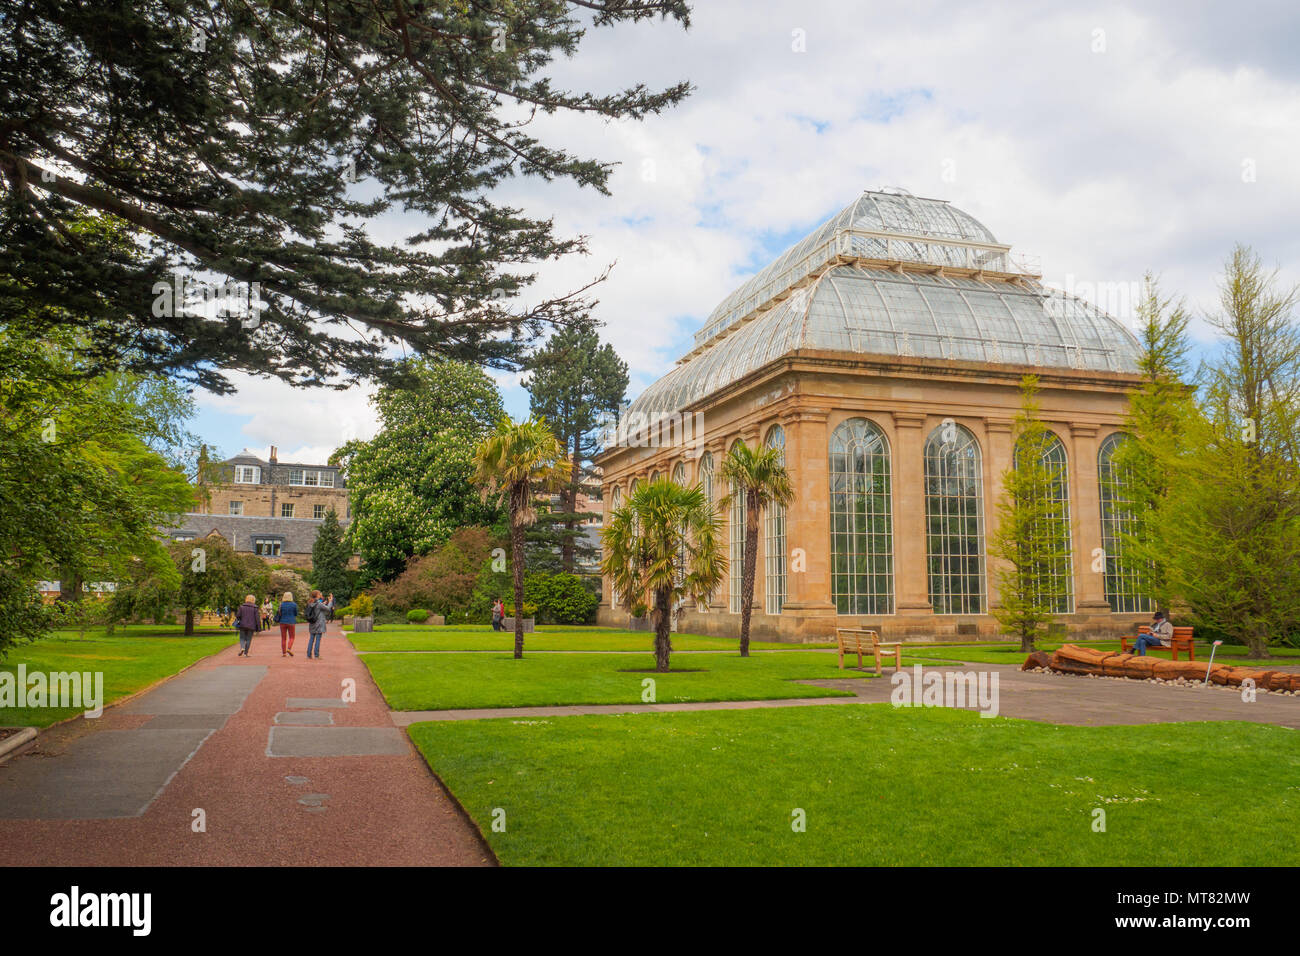 The Victorian Tropical Palm House, the oldest glasshouse at the Royal Botanic Gardens, a public park in Edinburgh, Scotland, UK. Stock Photo